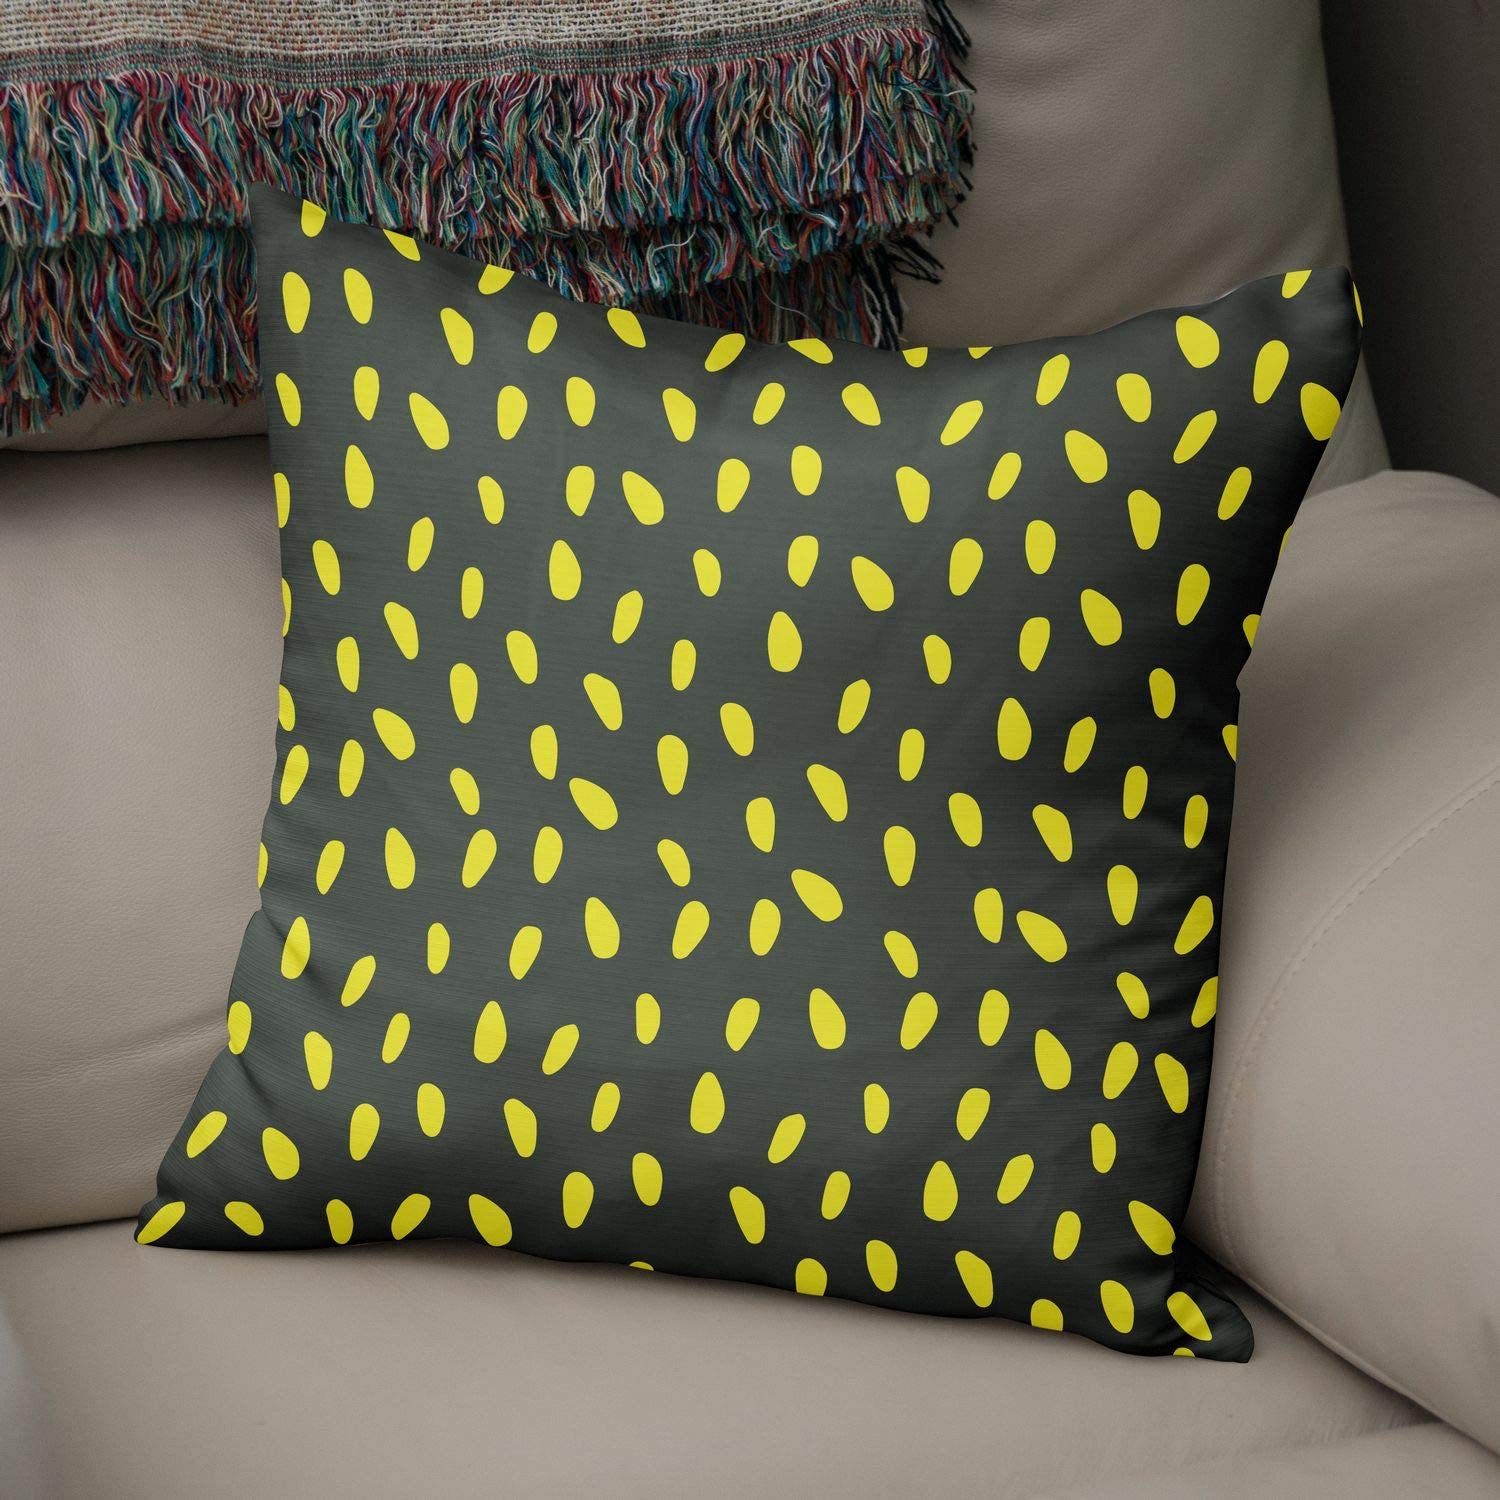 Bonamaison Yellow Spot Design Decorative Green Cushion Cover 43 x 43cm RRP £7.64 CLEARANCE XL £4.99